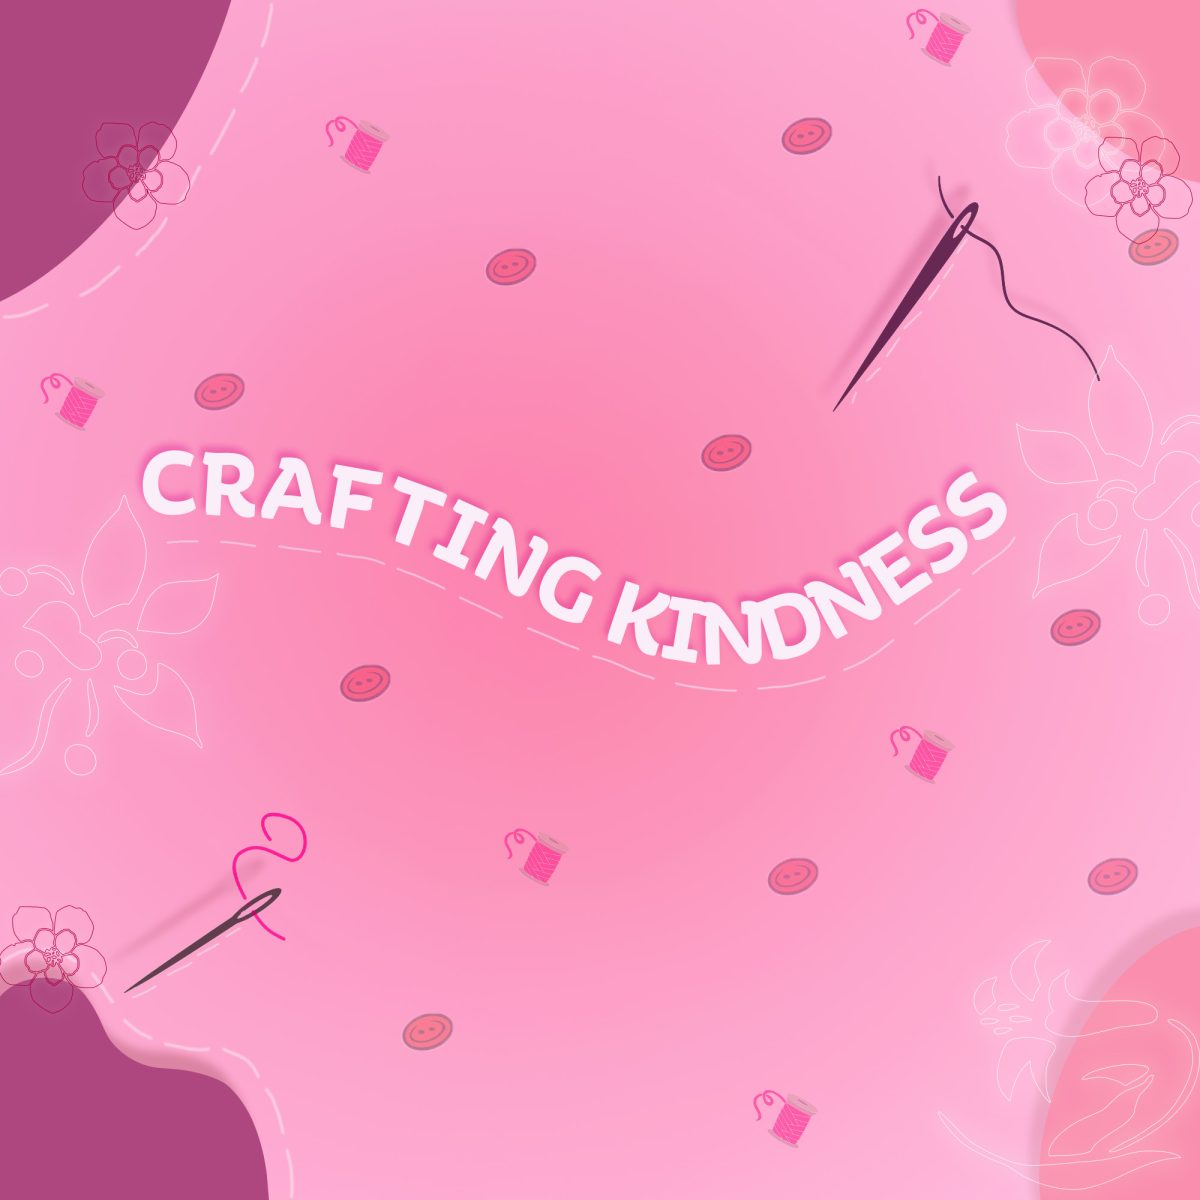 Crafting Kindness